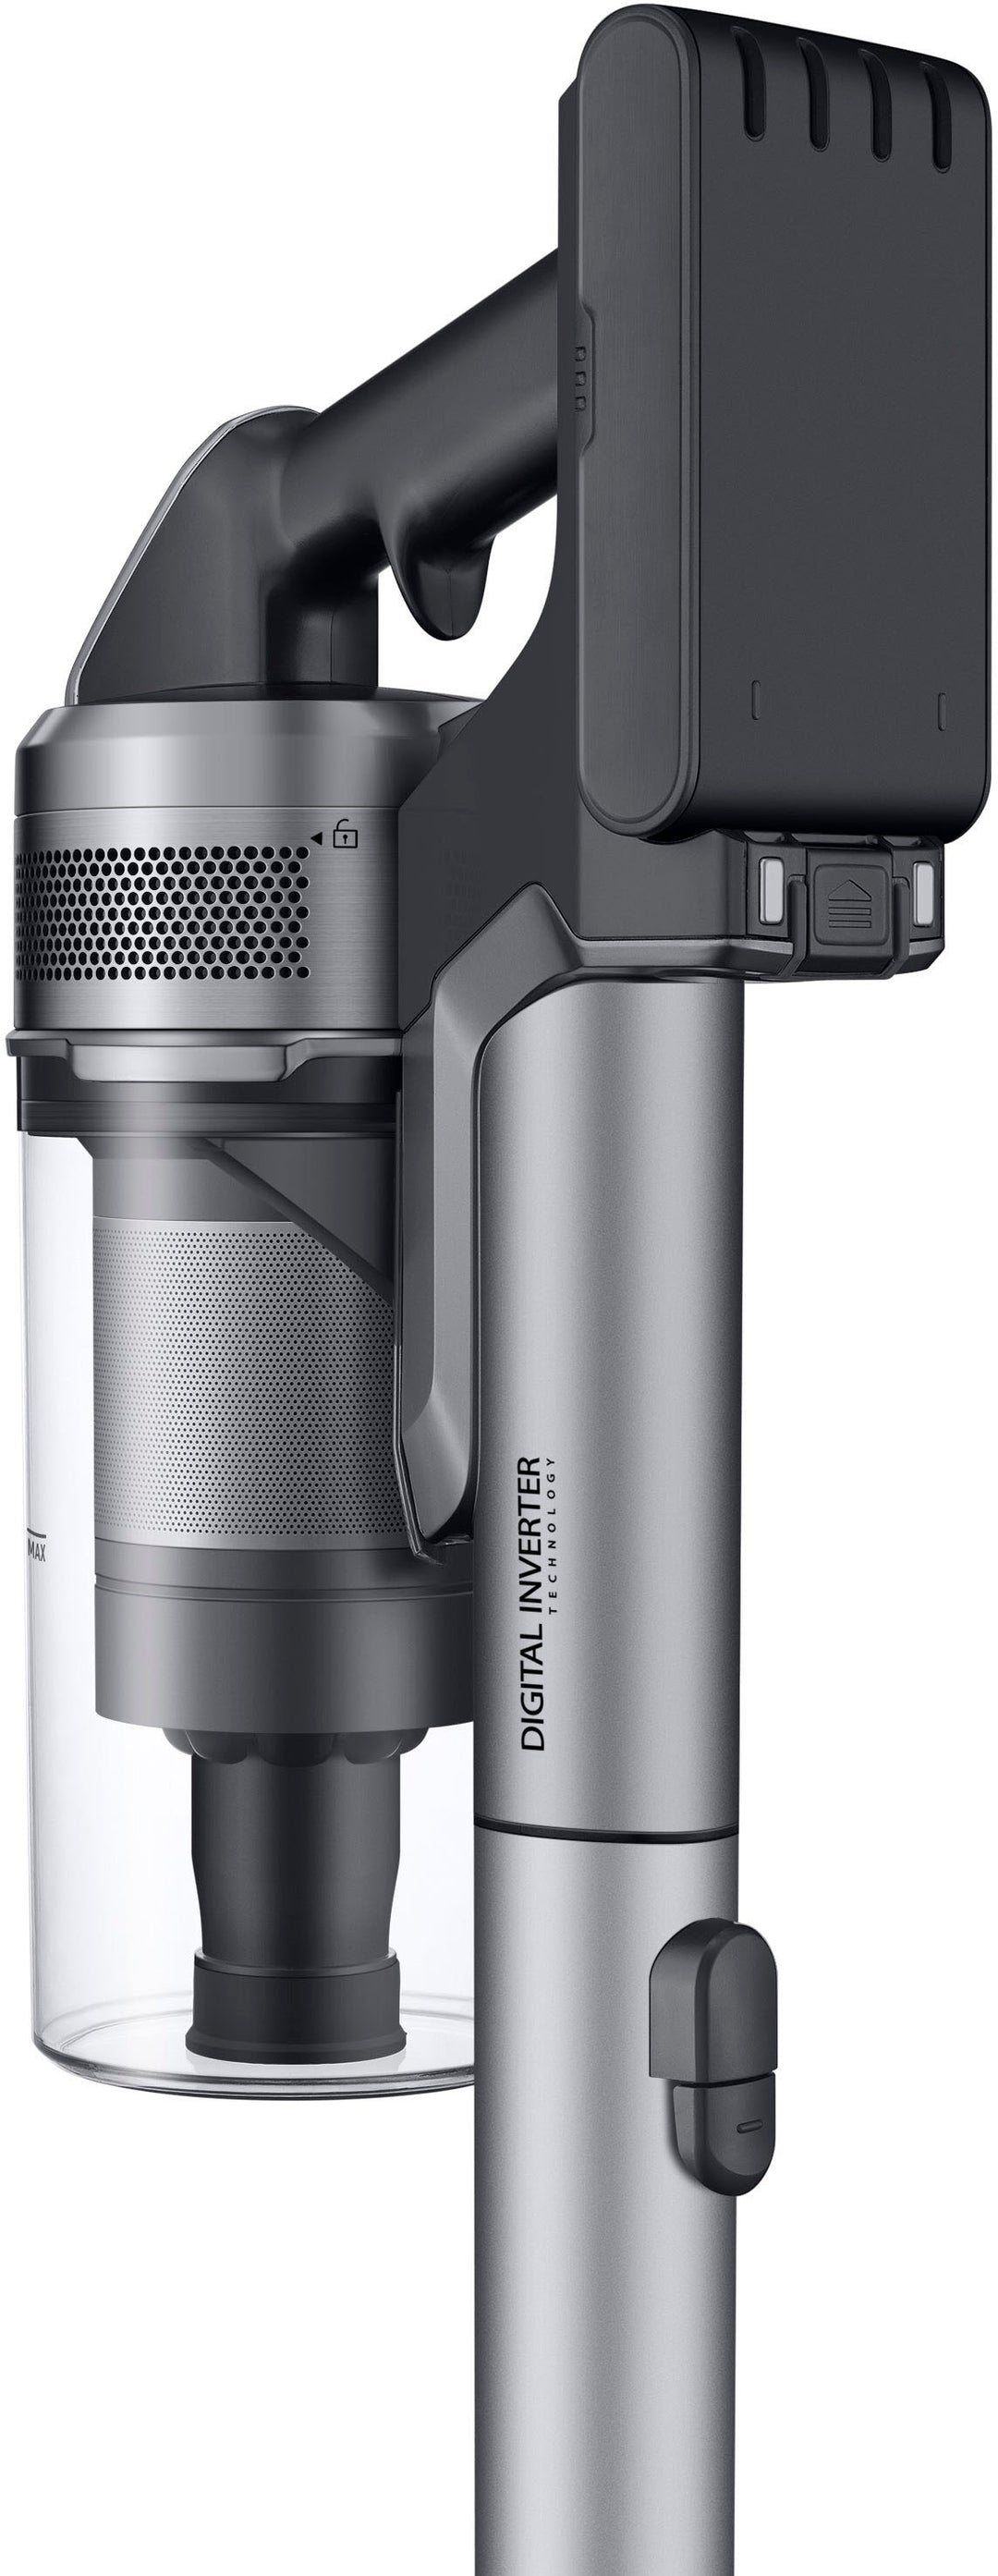 Samsung - Jet™ 75+ Cordless Stick Vacuum with Additional Battery - Titan ChroMetal_10